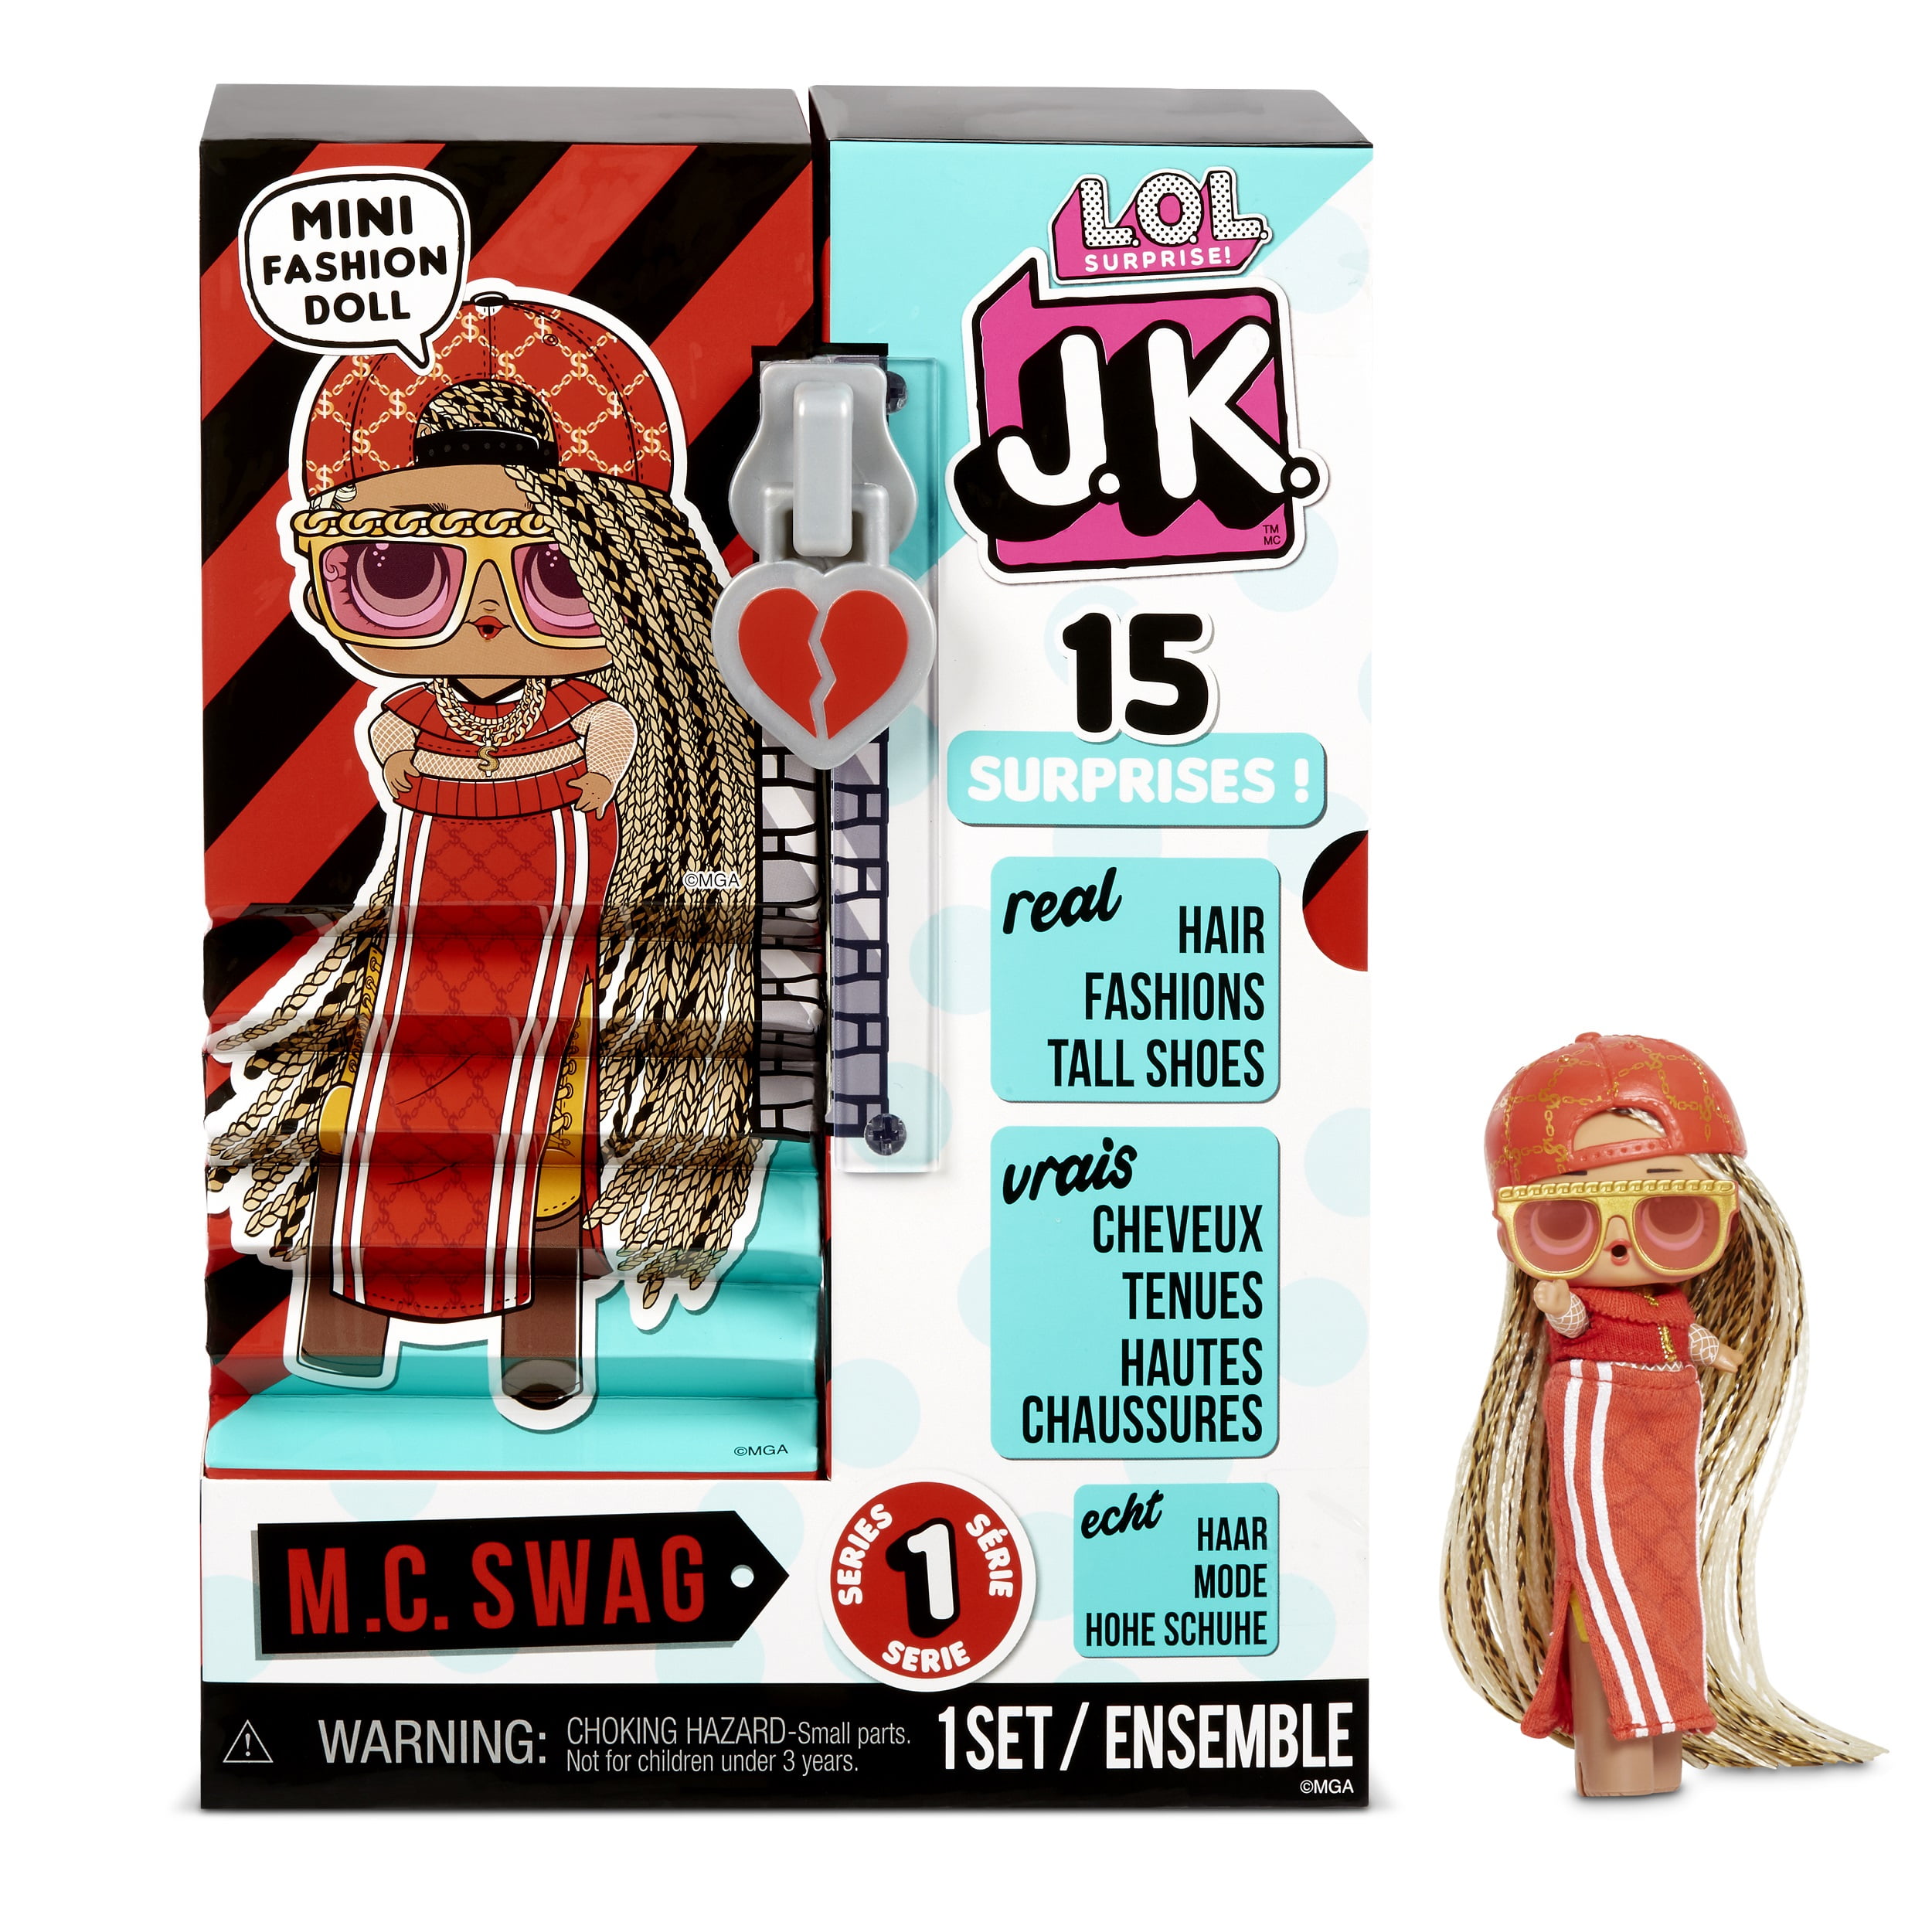 2 LOL Surprise JK Queen Bee MC Swag Fashion Doll 15 Surprises Series 1 Dolls for sale online